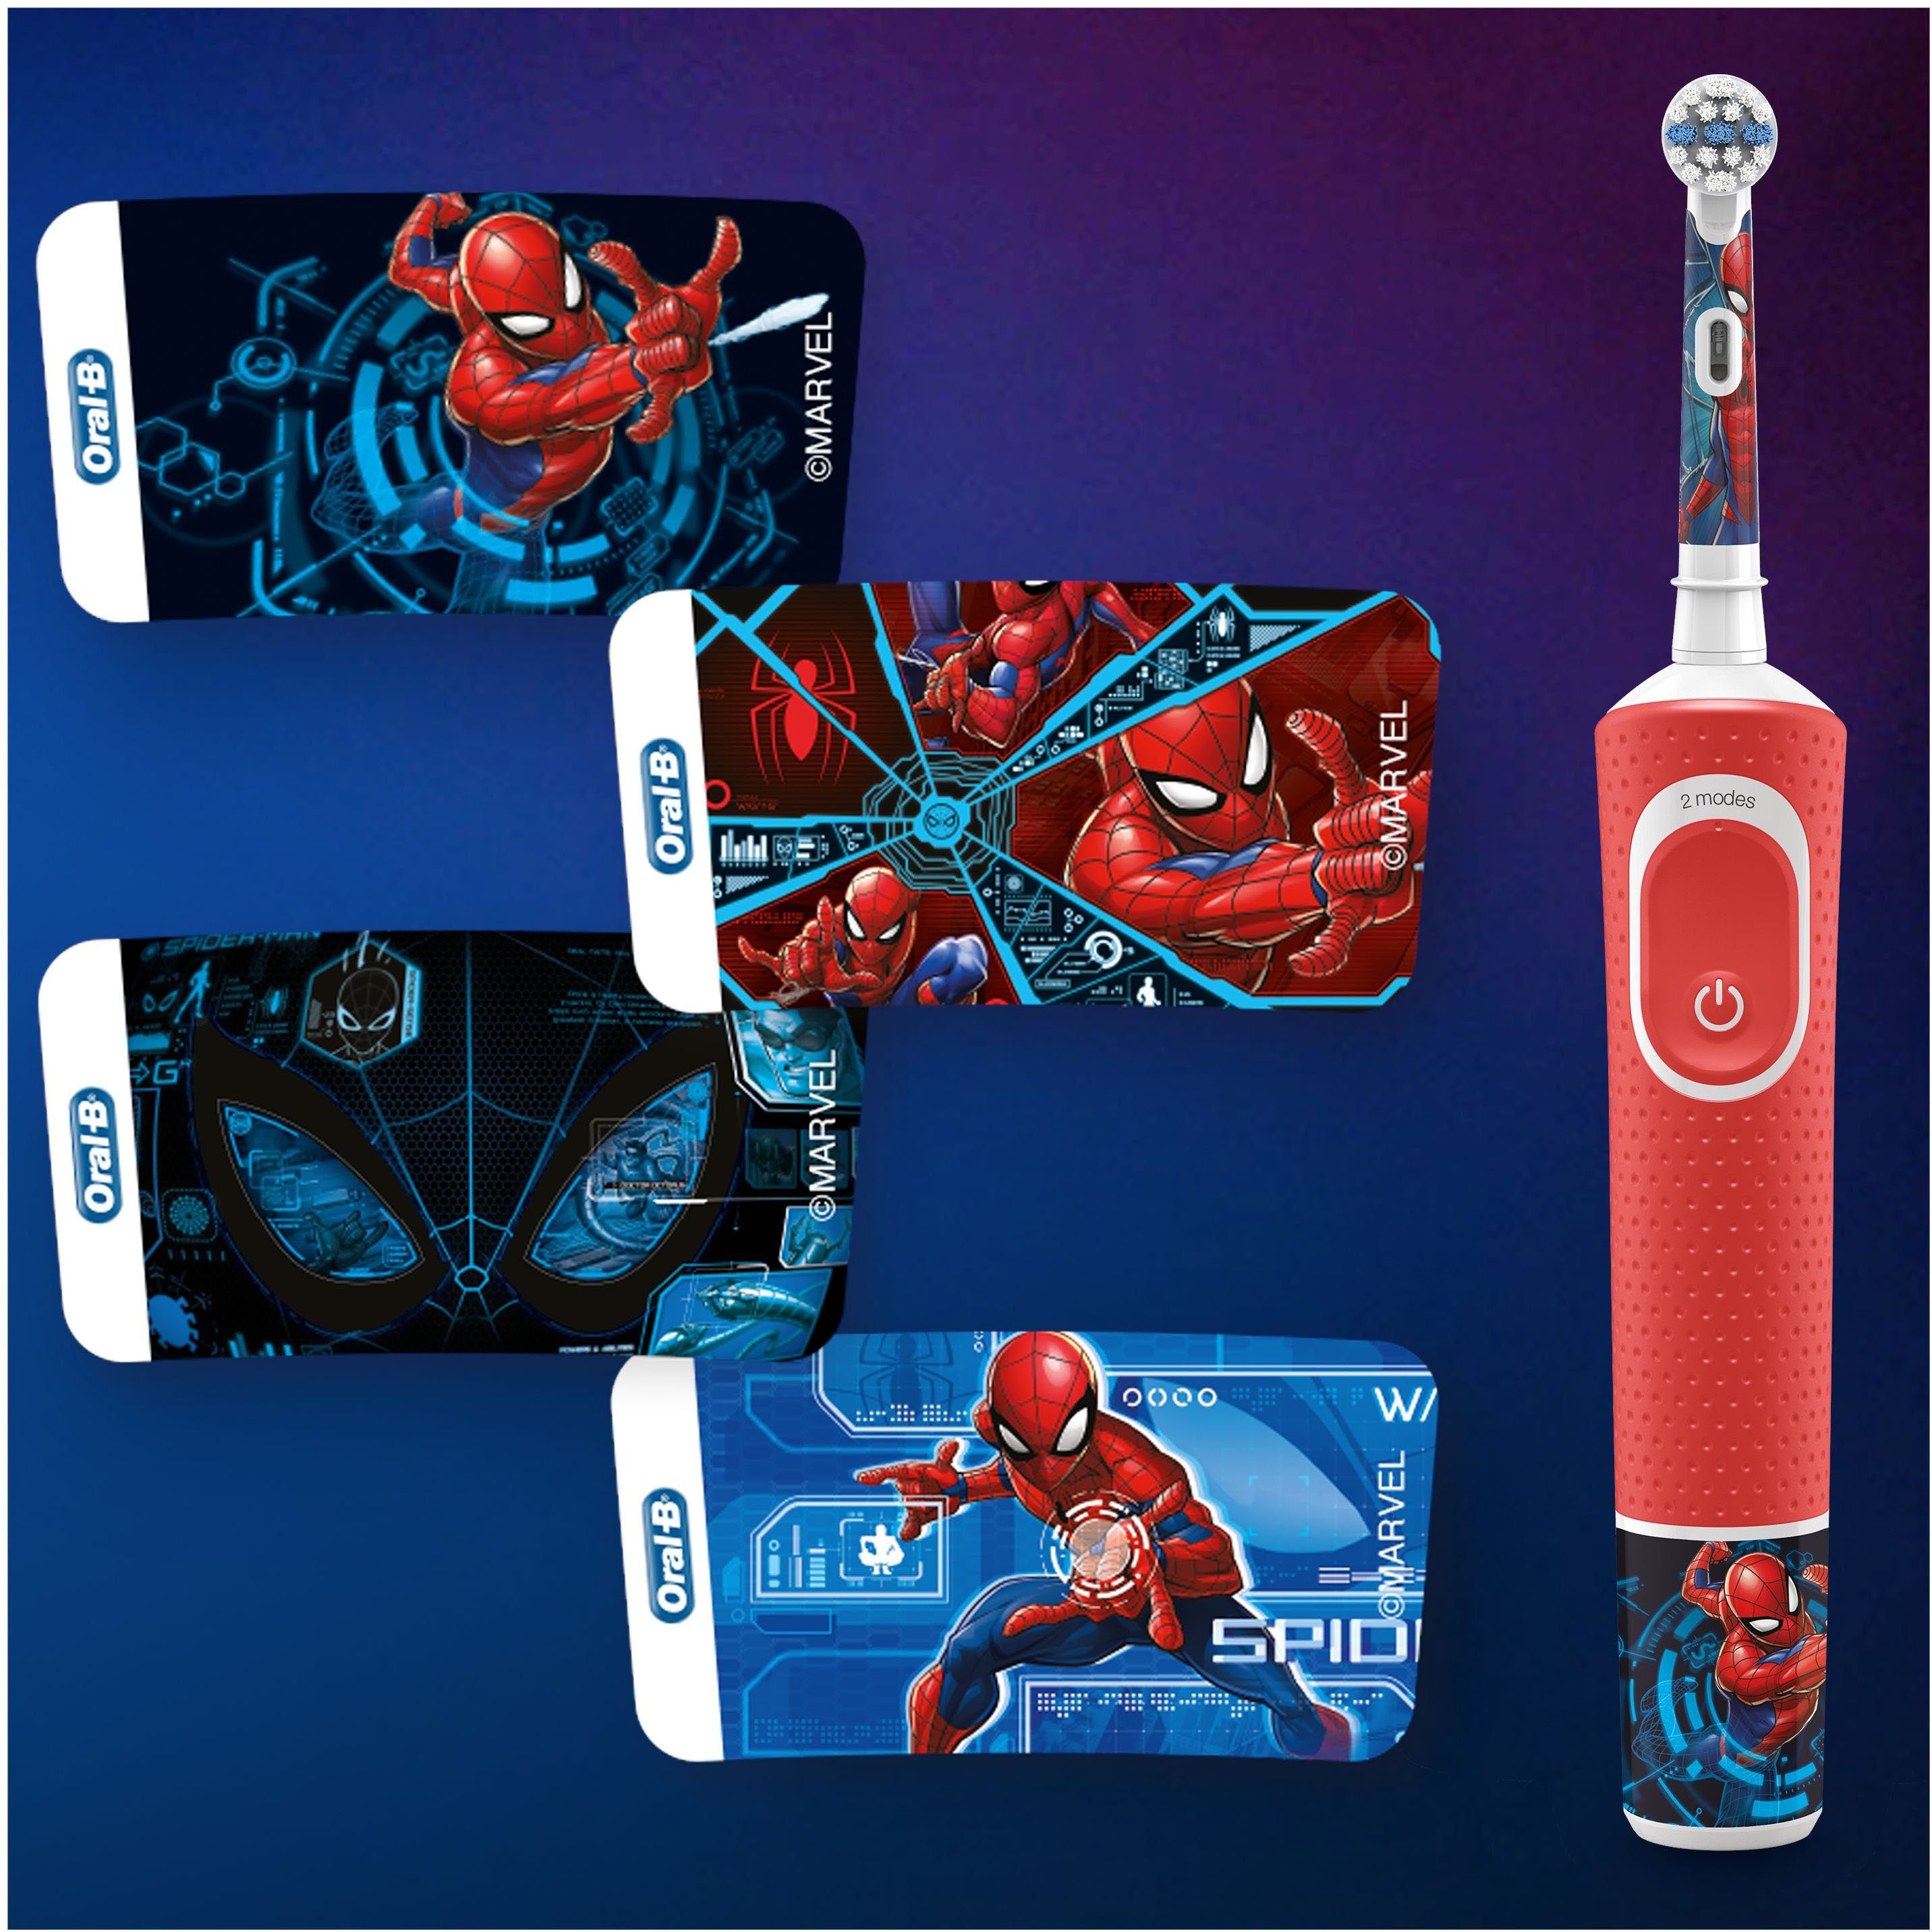 Kruipen Riet paars Oral B Elektrische kindertandenborstel Kids Spiderman in de online winkel |  OTTO